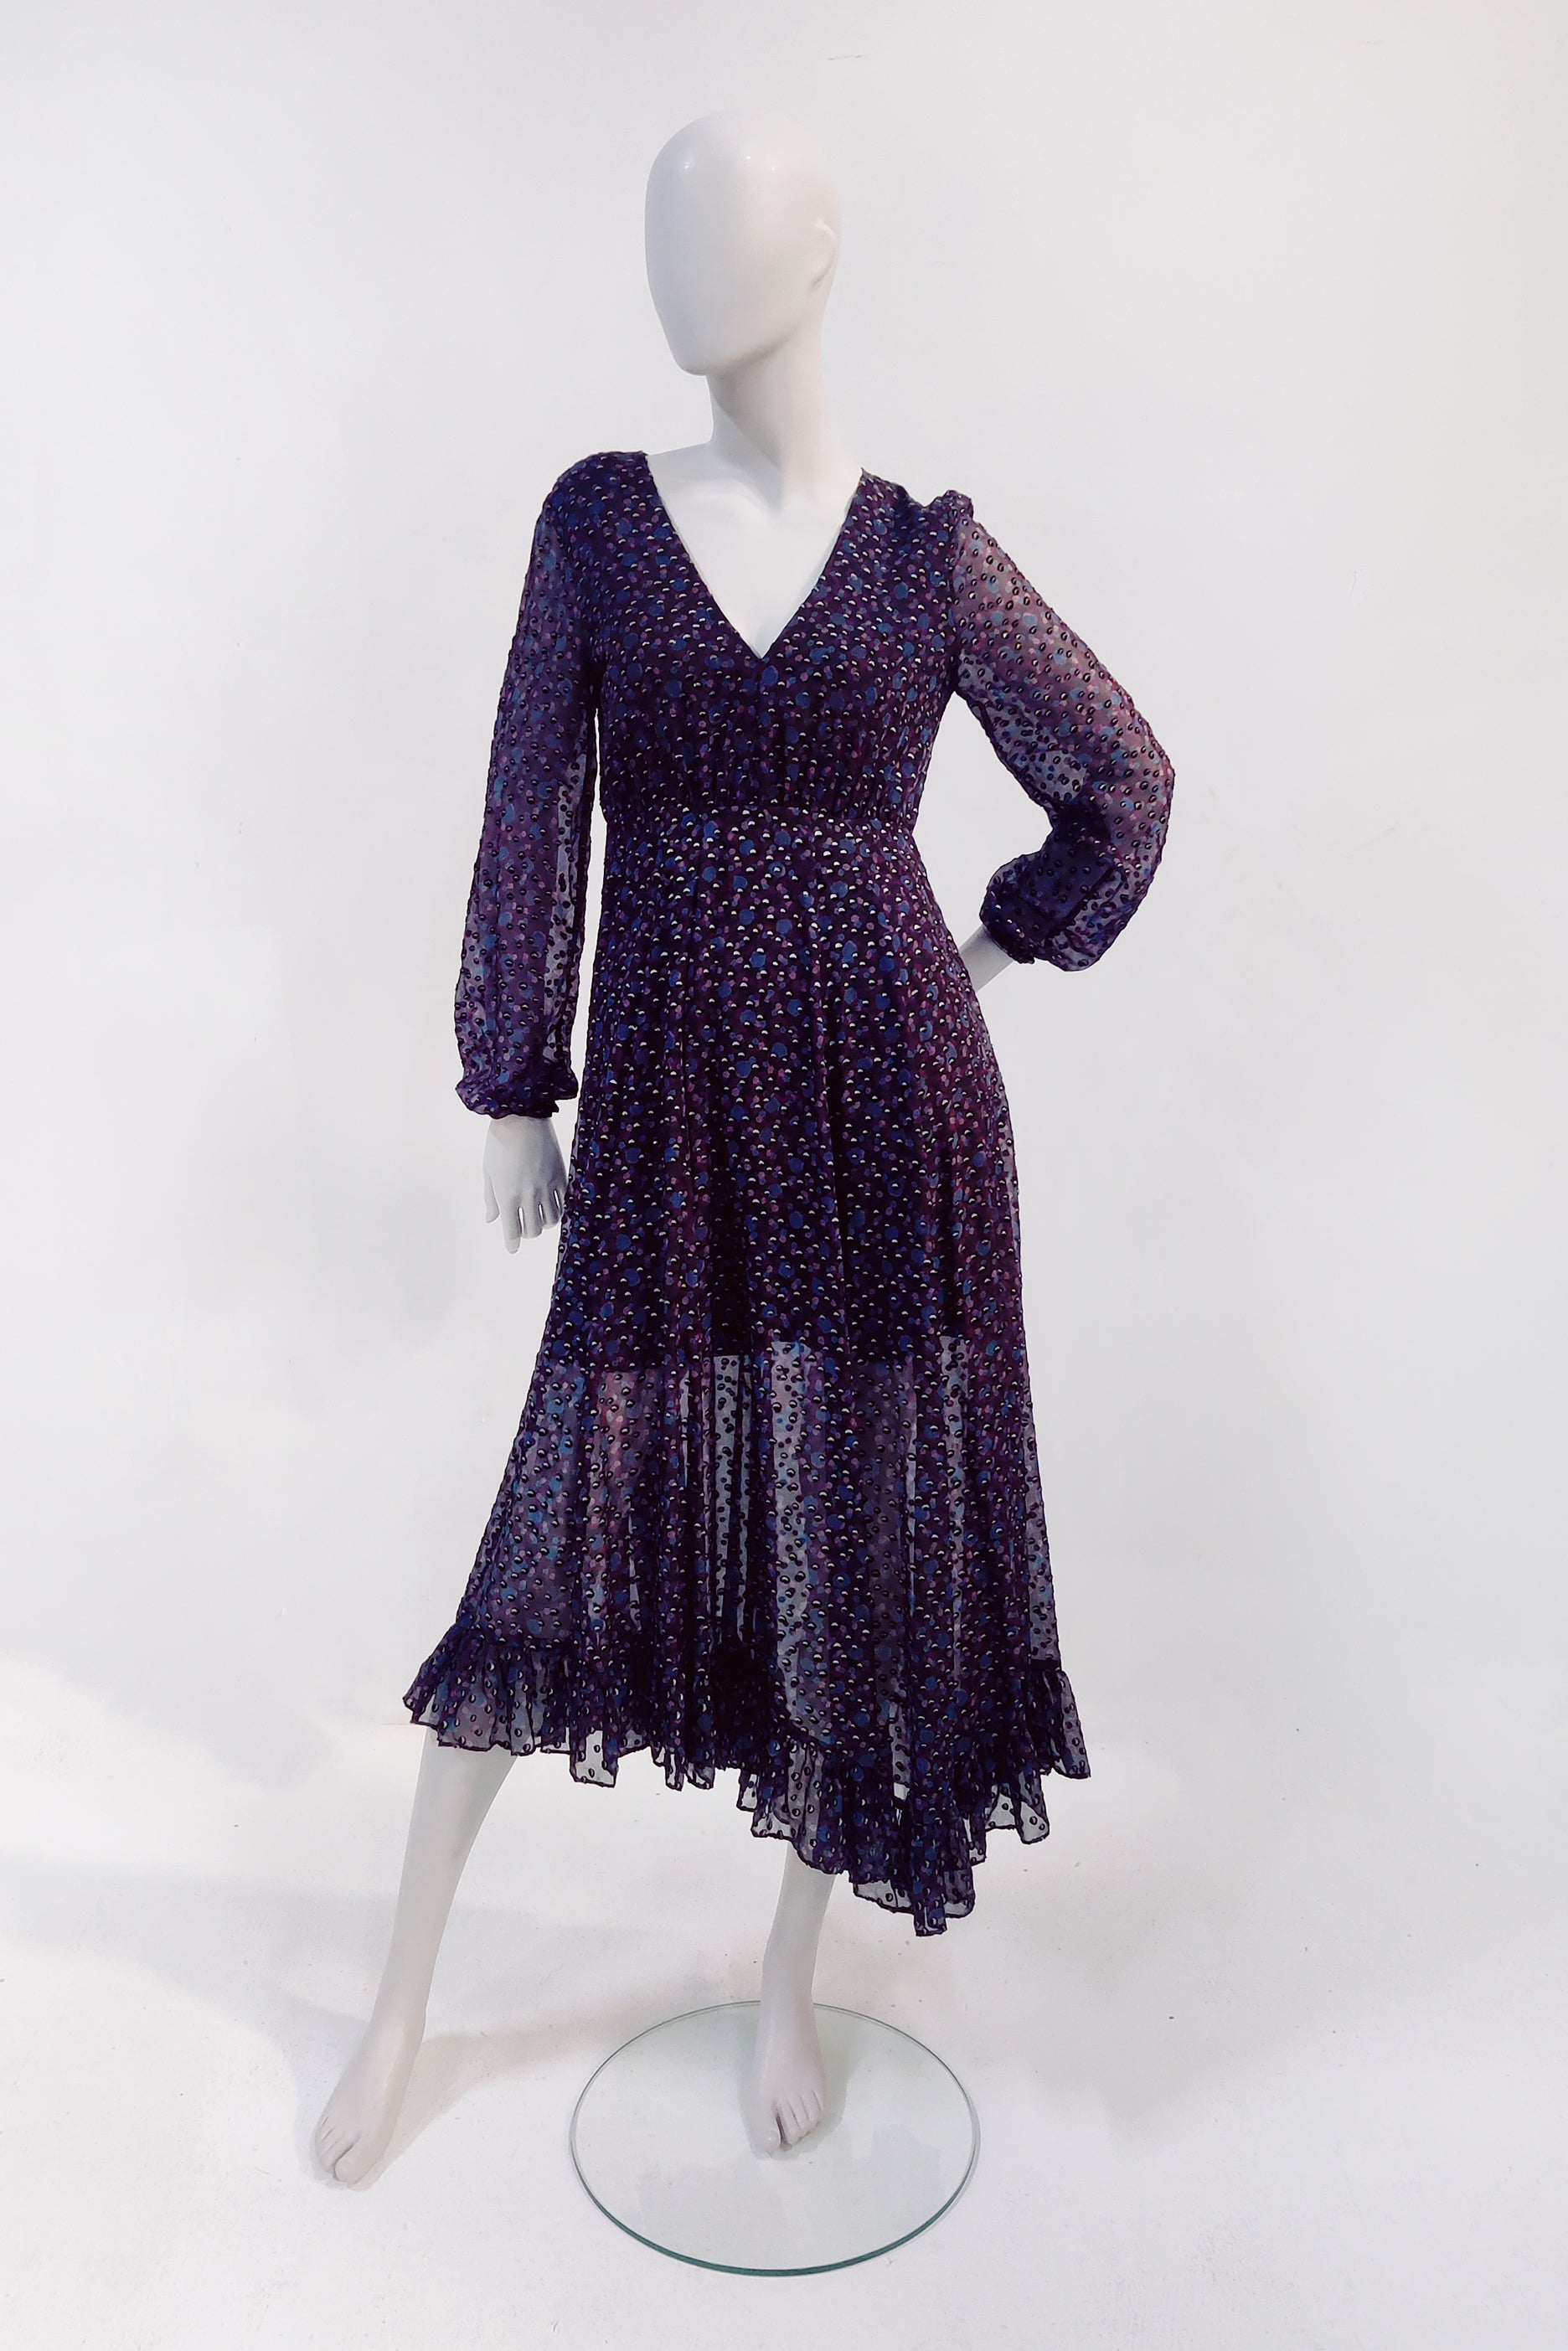 Maje Purple Floral Dress (Eu36-38)